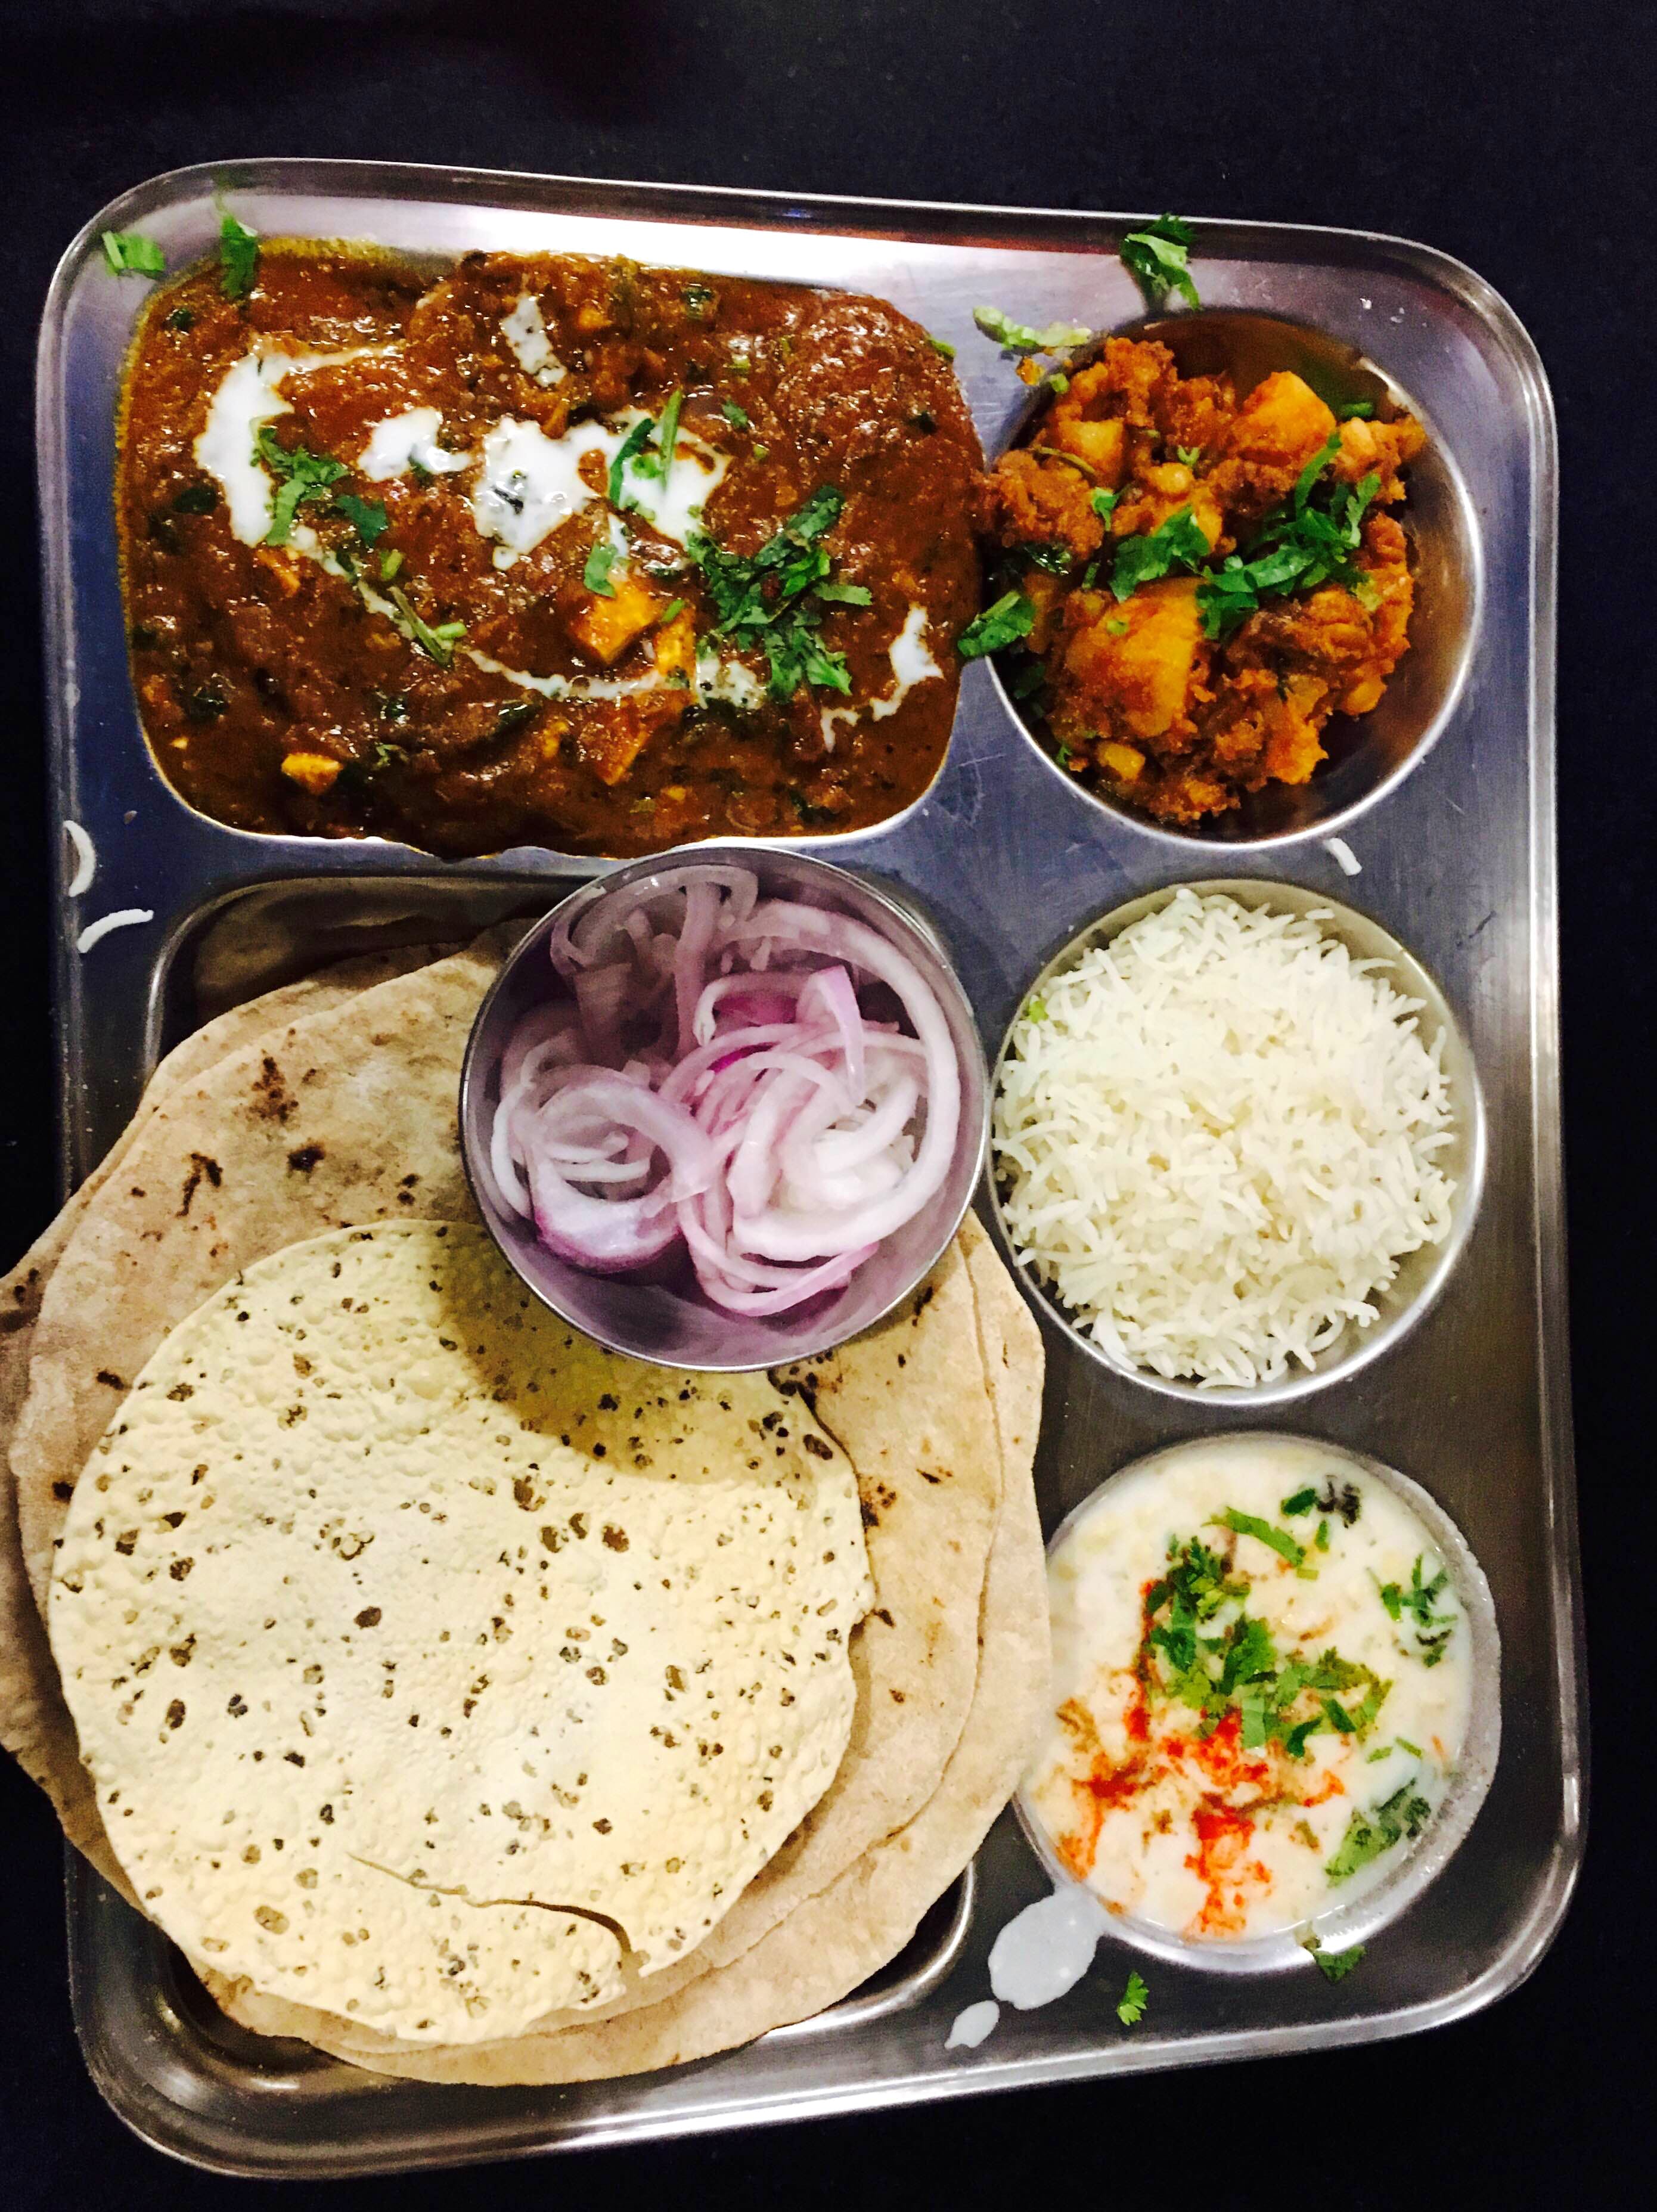 Dish,Food,Cuisine,Naan,Meal,Ingredient,Lunch,Flatbread,Punjabi cuisine,Chapati